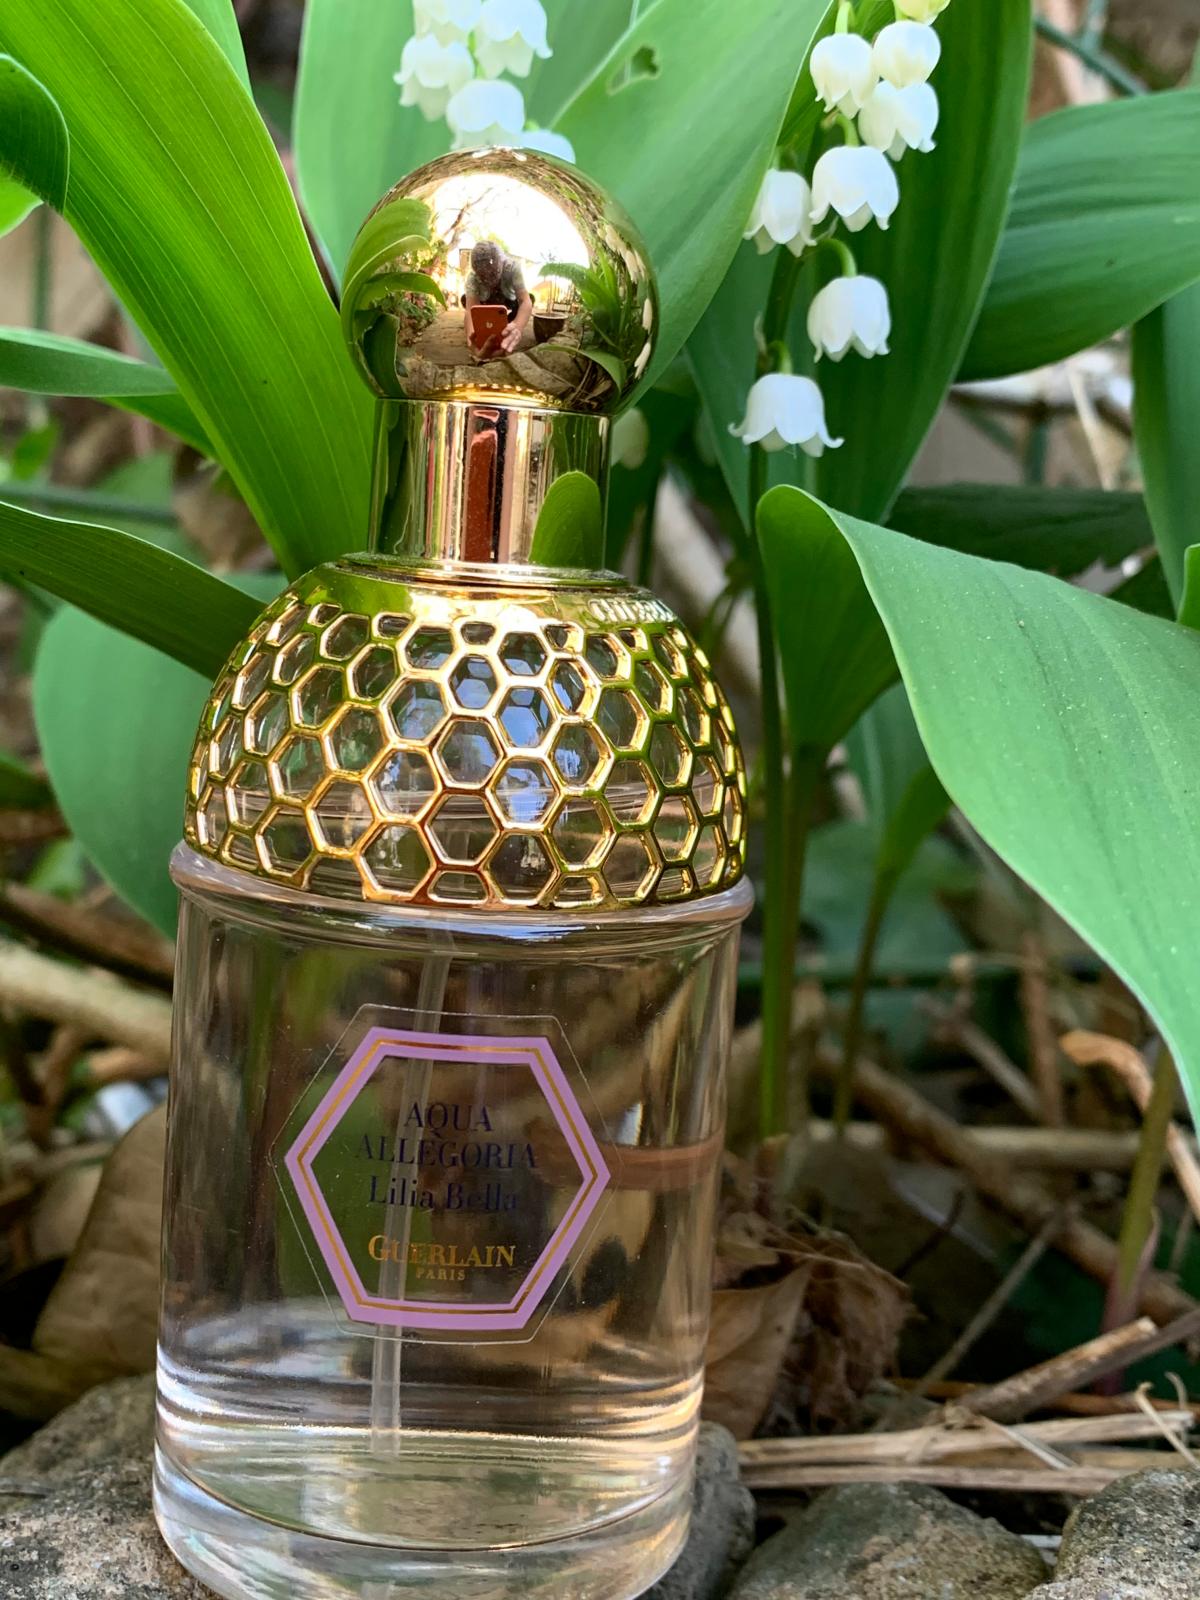 Aqua Allegoria Lilia Bella Guerlain perfume - a fragrance for women 2001